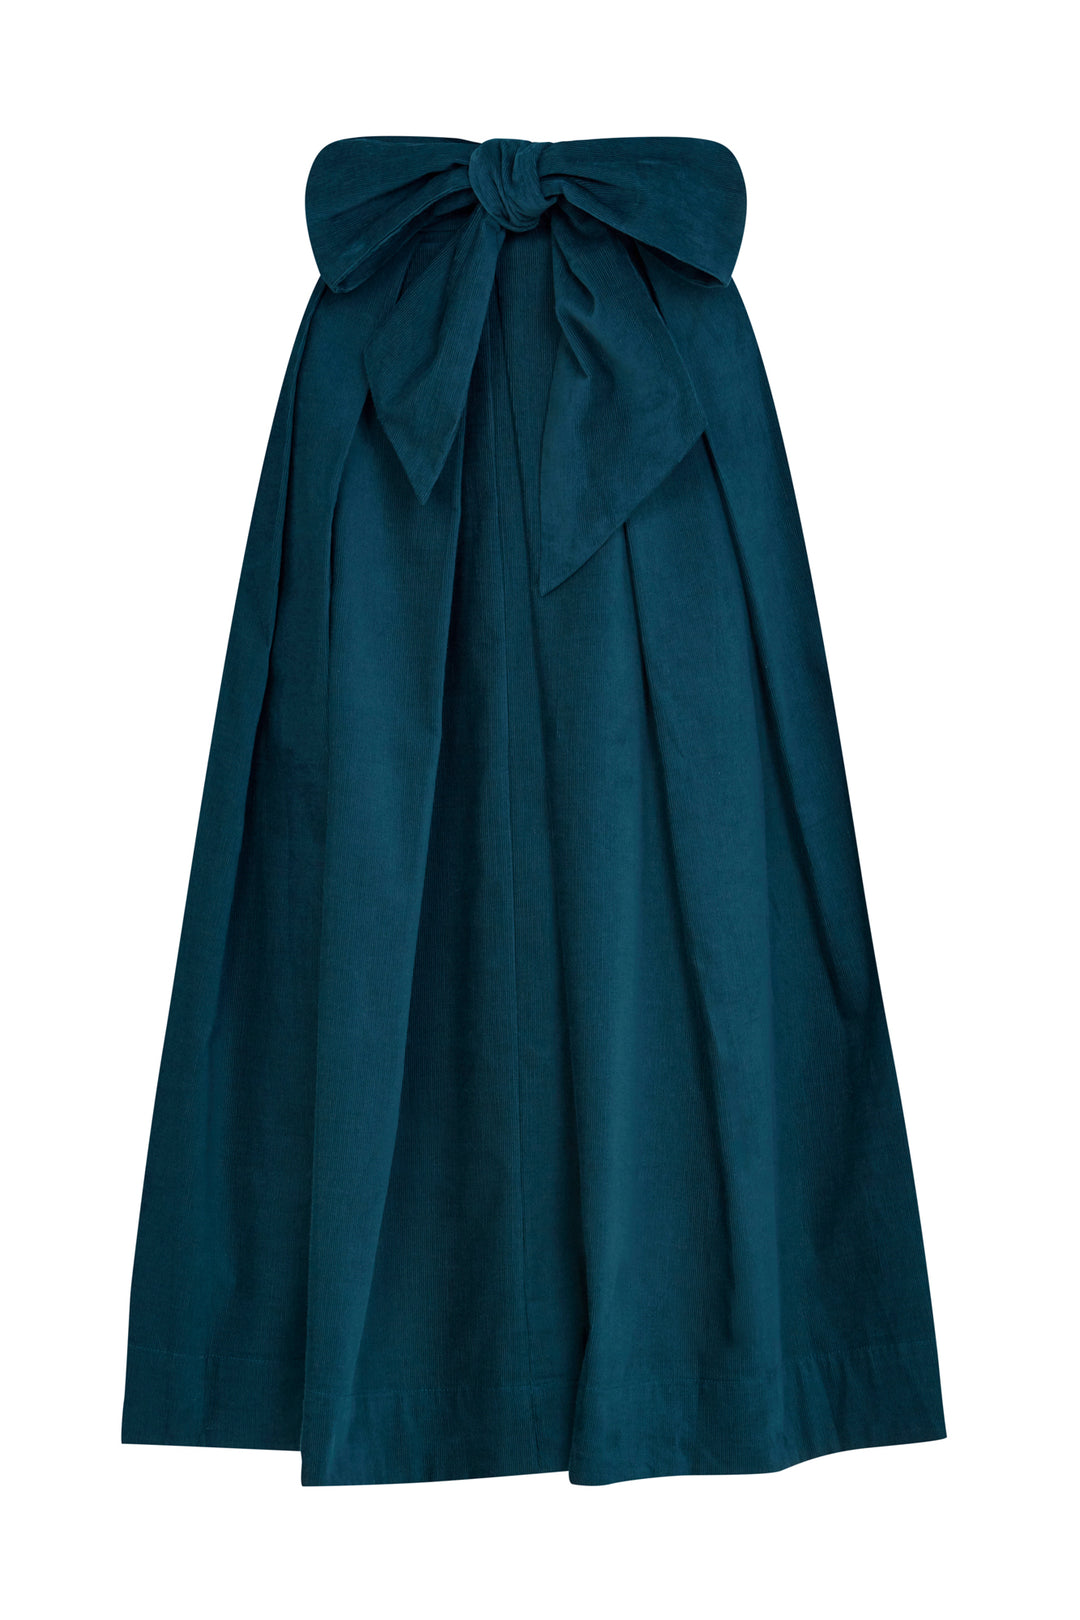 Jemima Needlecord Deep Teal Skirt – Emily and Fin